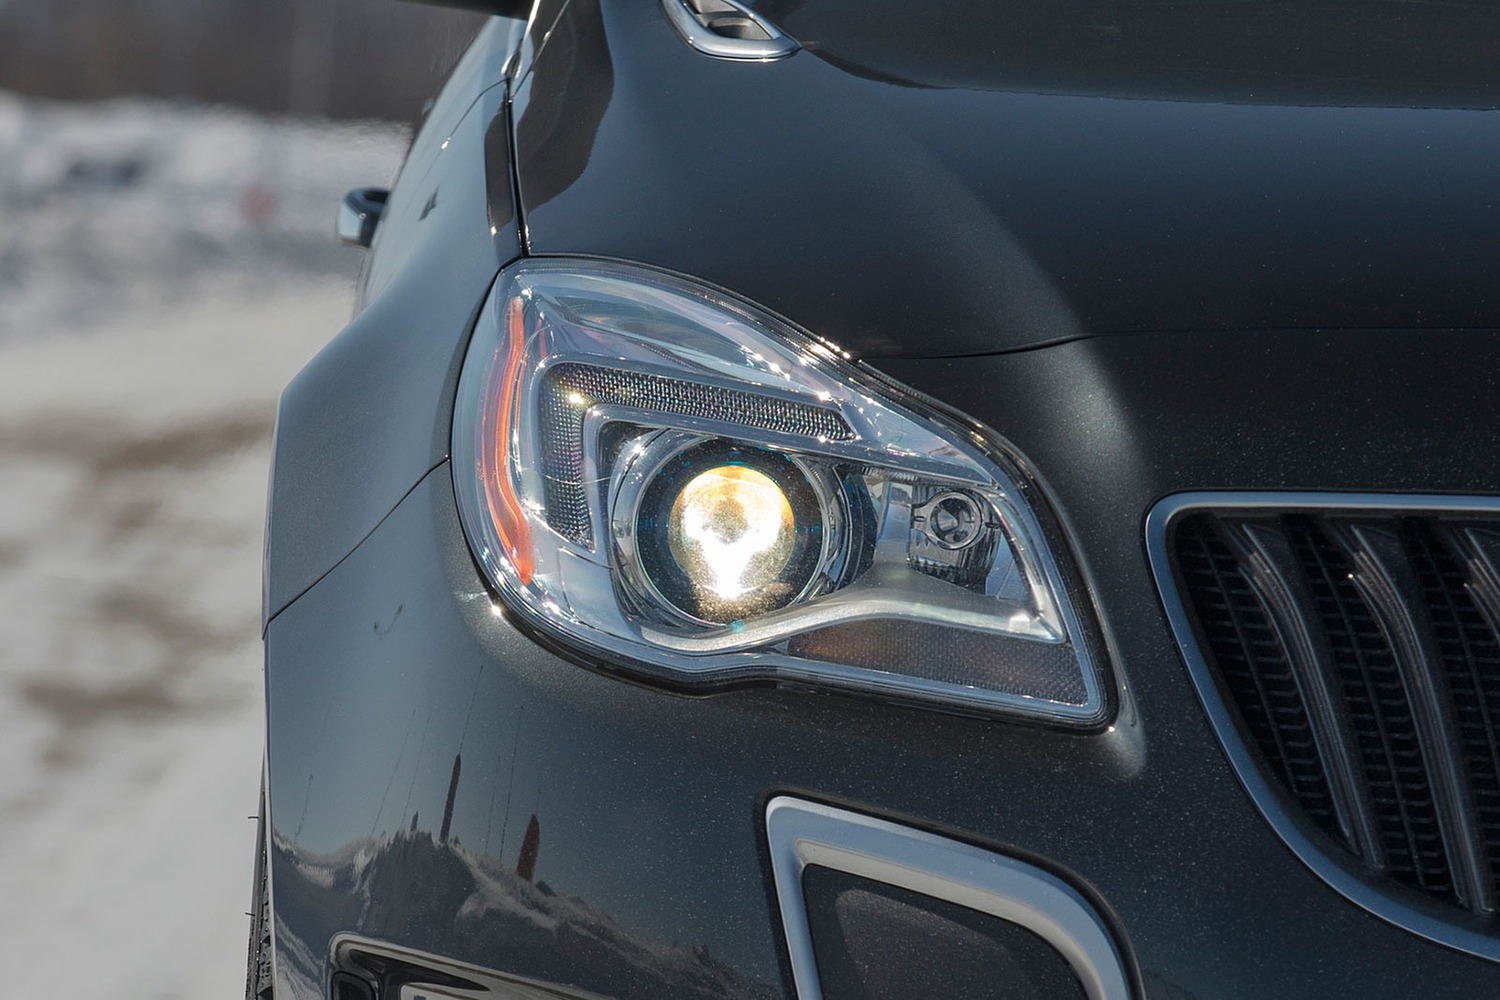 Buick Regal GS Sedan Exterior Headlamp Detail (2015 model year shown)